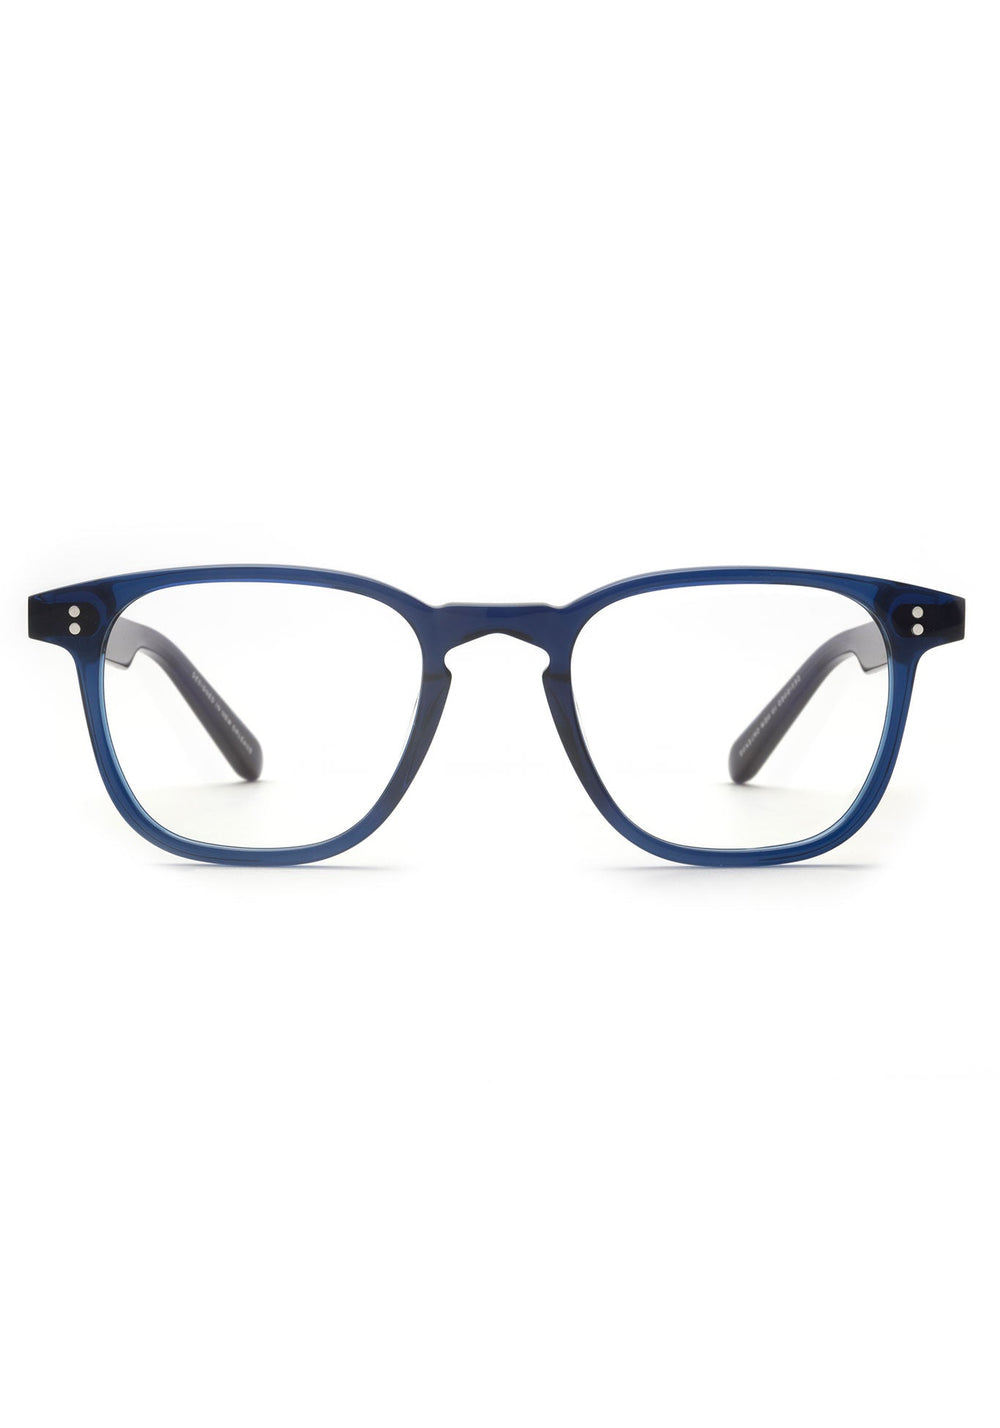 KREWE - STATE | Midnight handcrafted, luxury blue acetate sunglasses